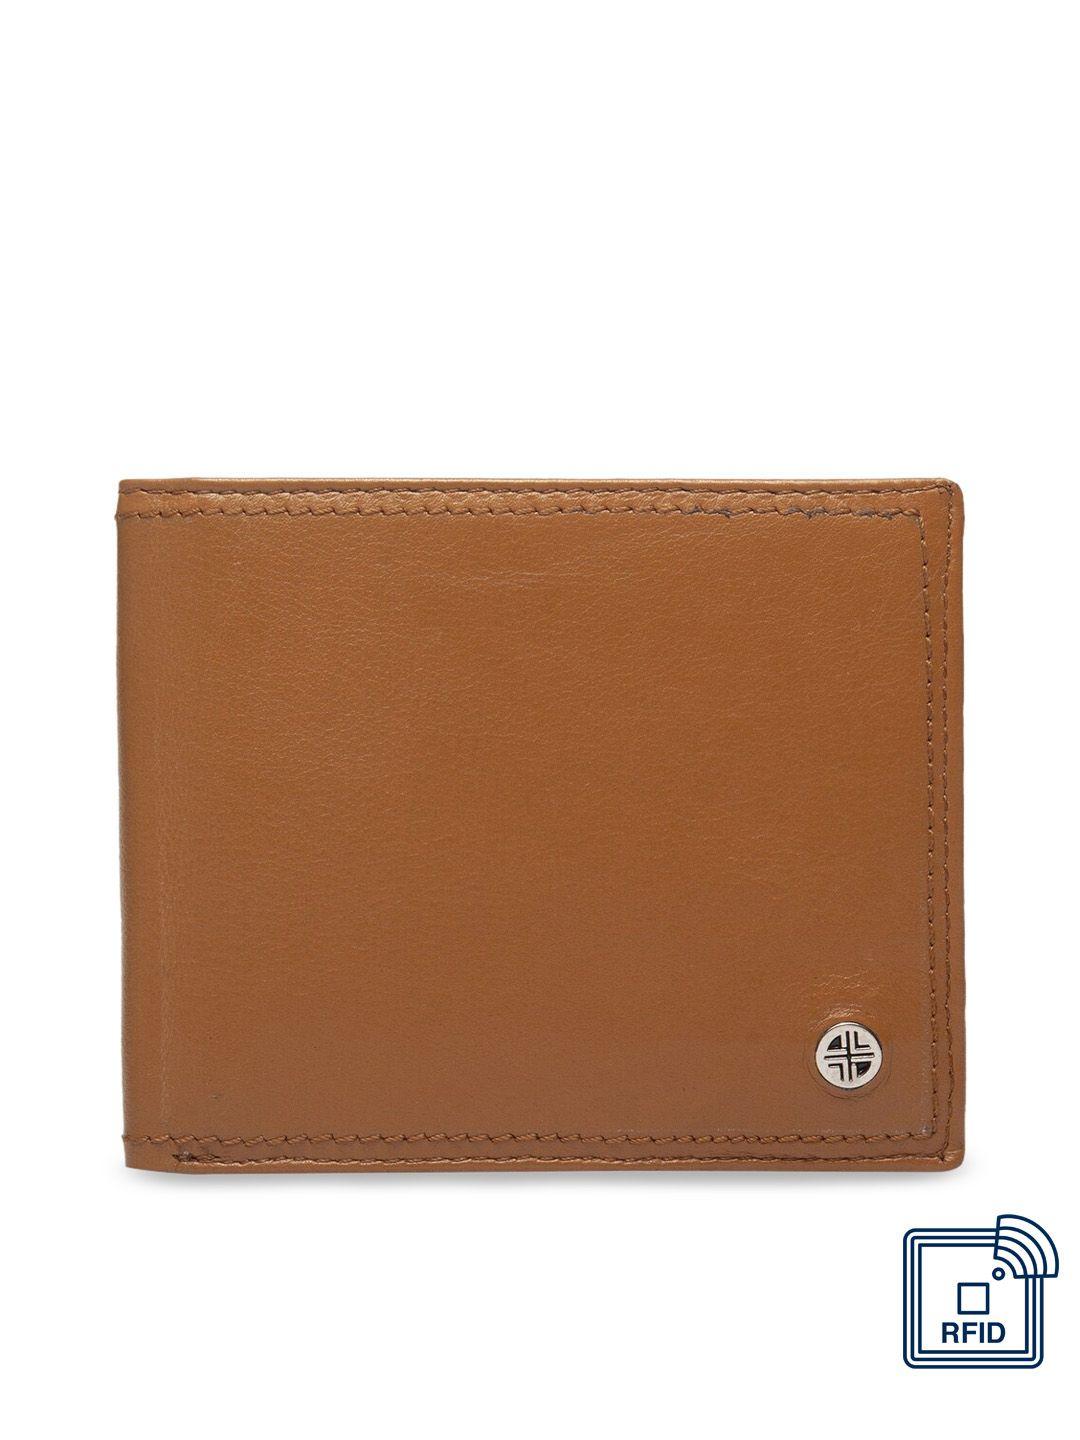 carlton london men tan brown solid rfid leather two fold wallet